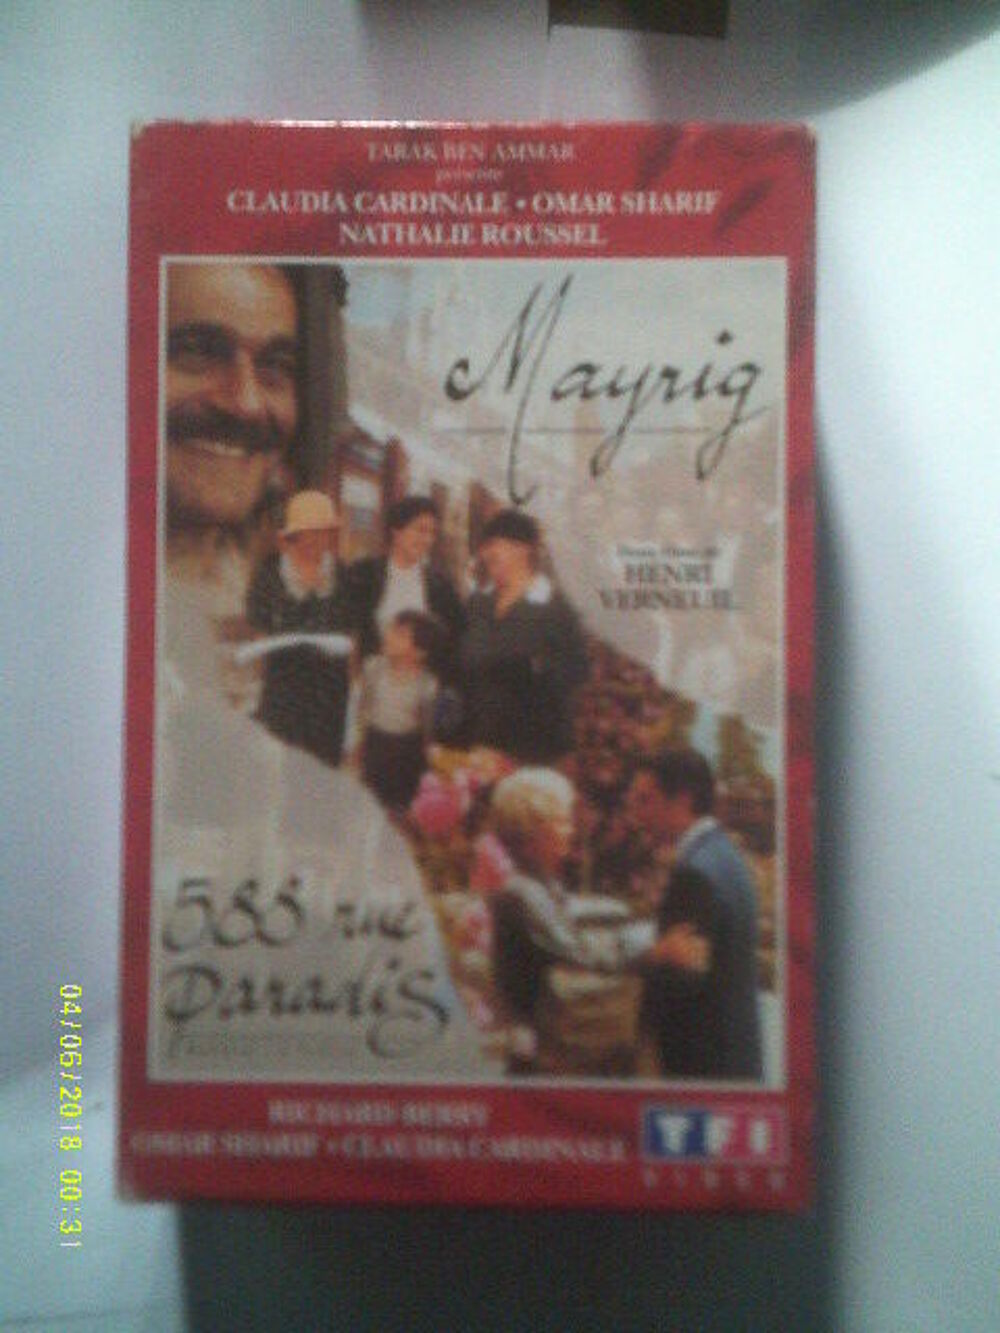 MAYRIG + 588 rue PARADIS, vhs, claudia cardinale omar sharif DVD et blu-ray